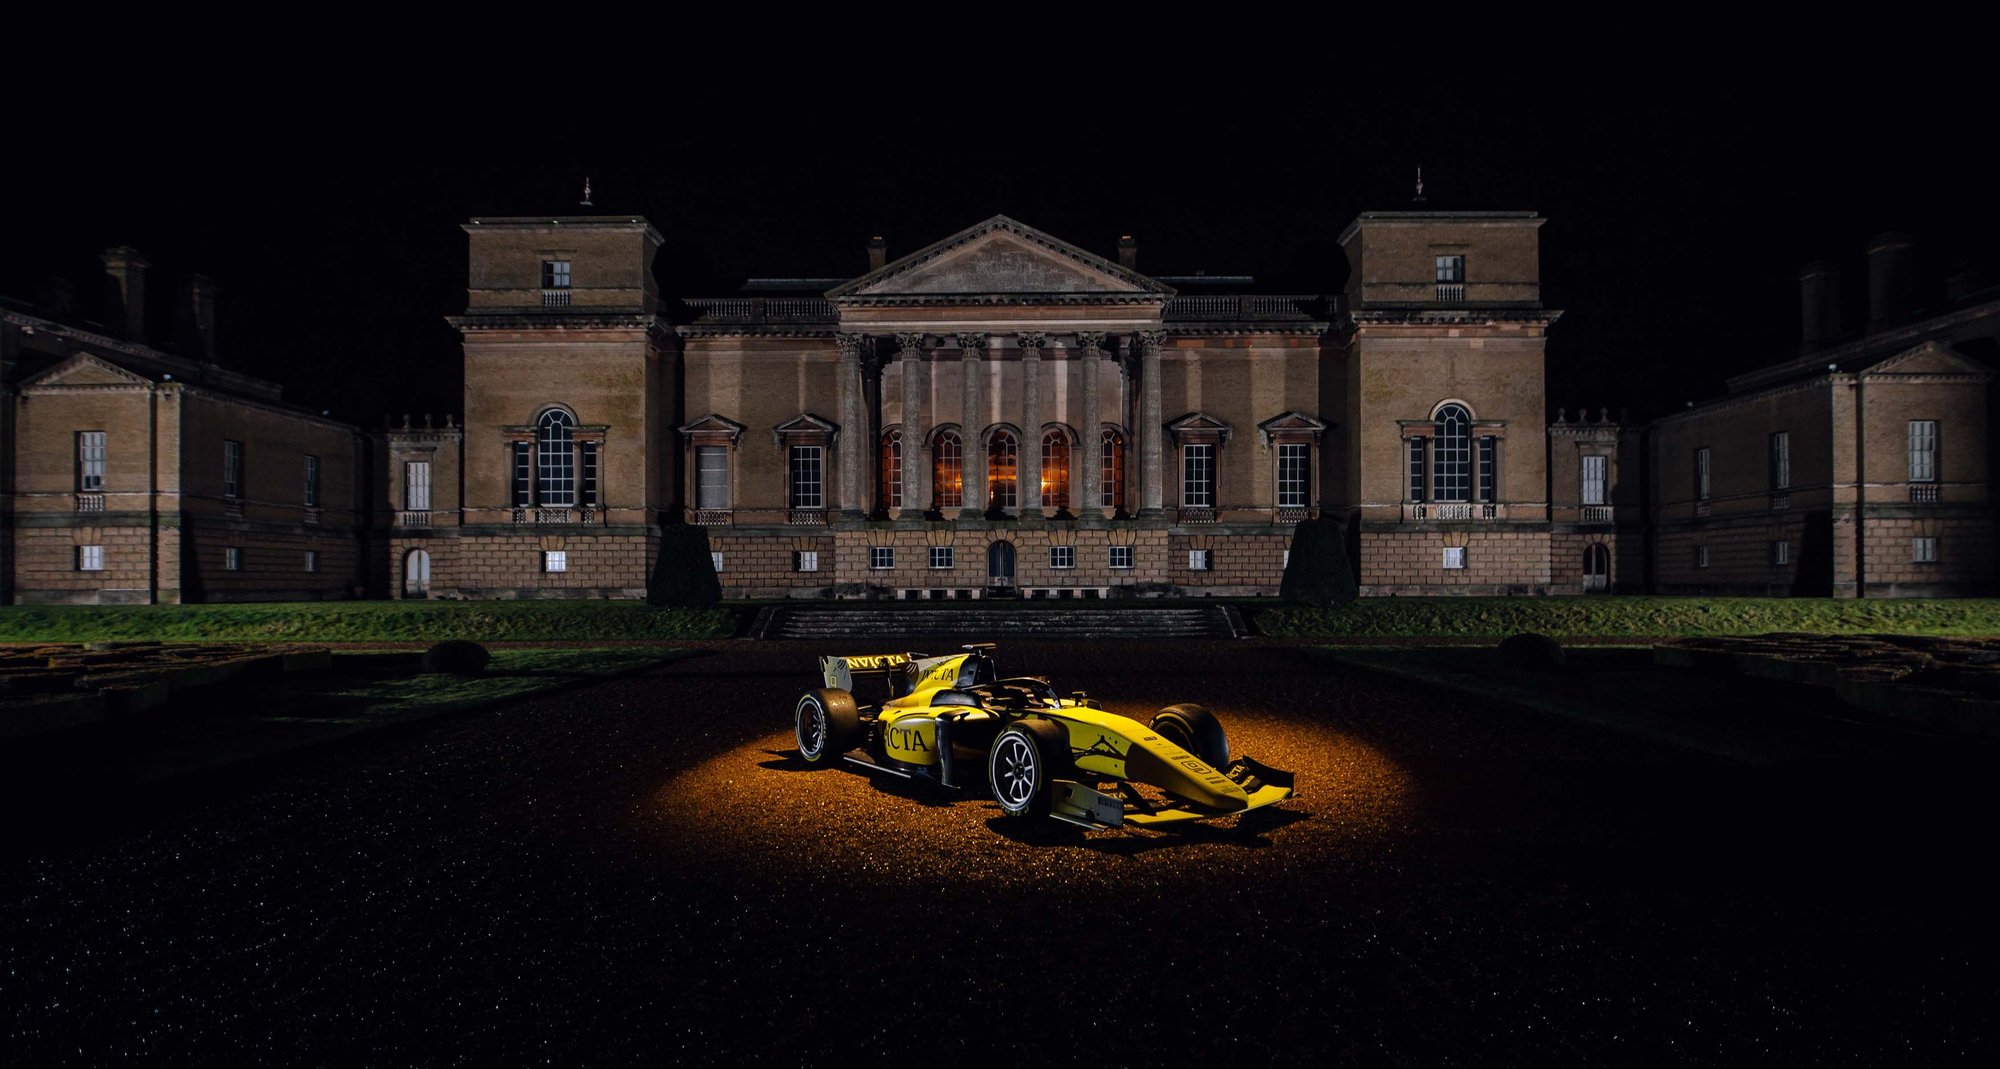 Invicta Racing car at Holkham Hall